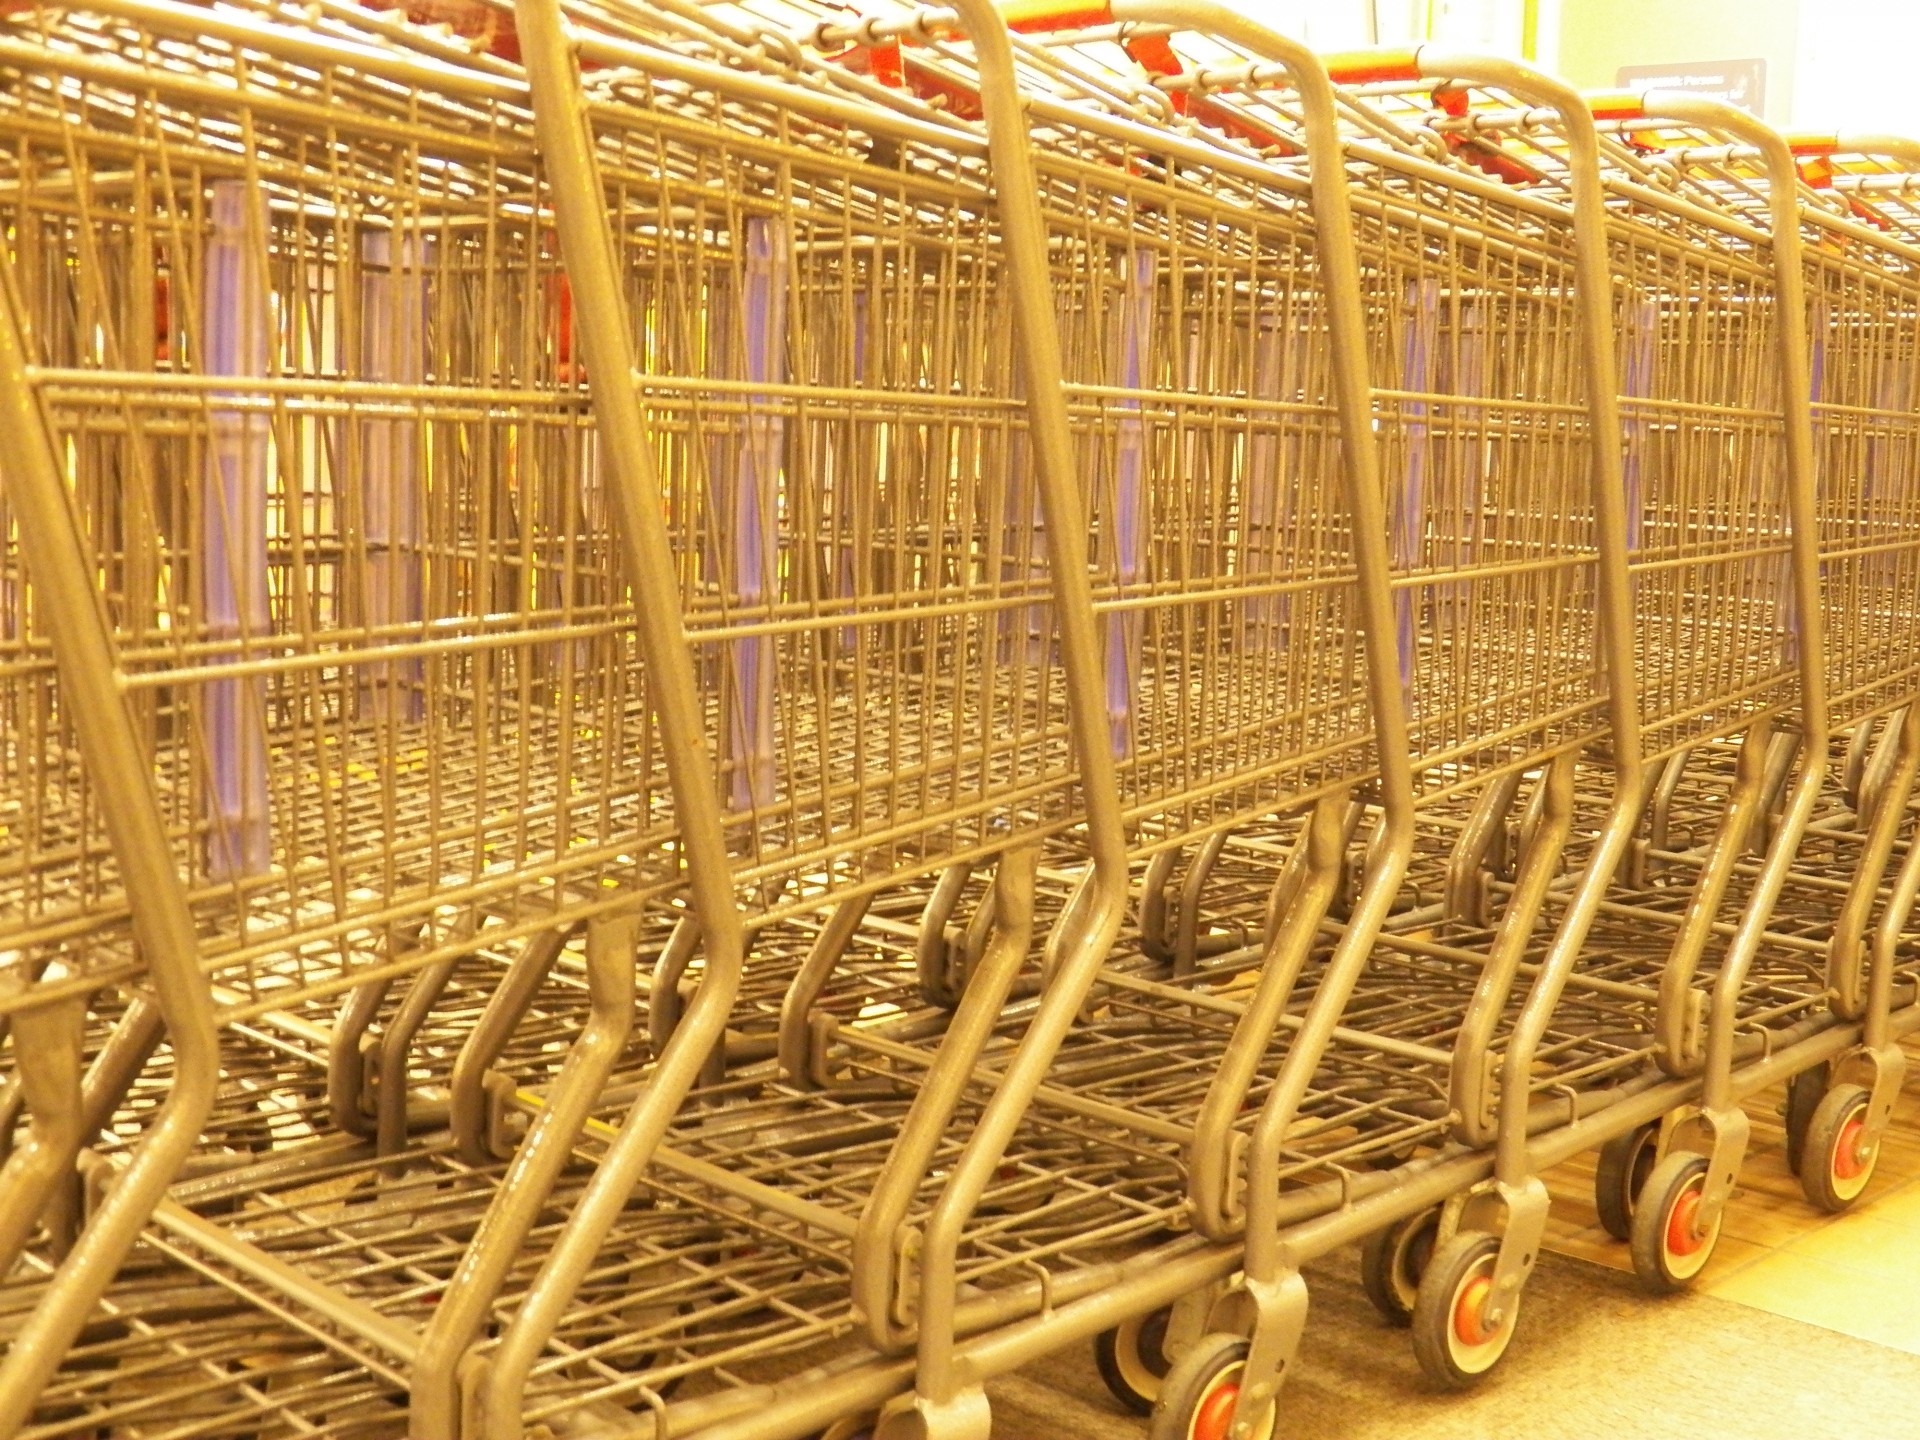 photo of shopping carts